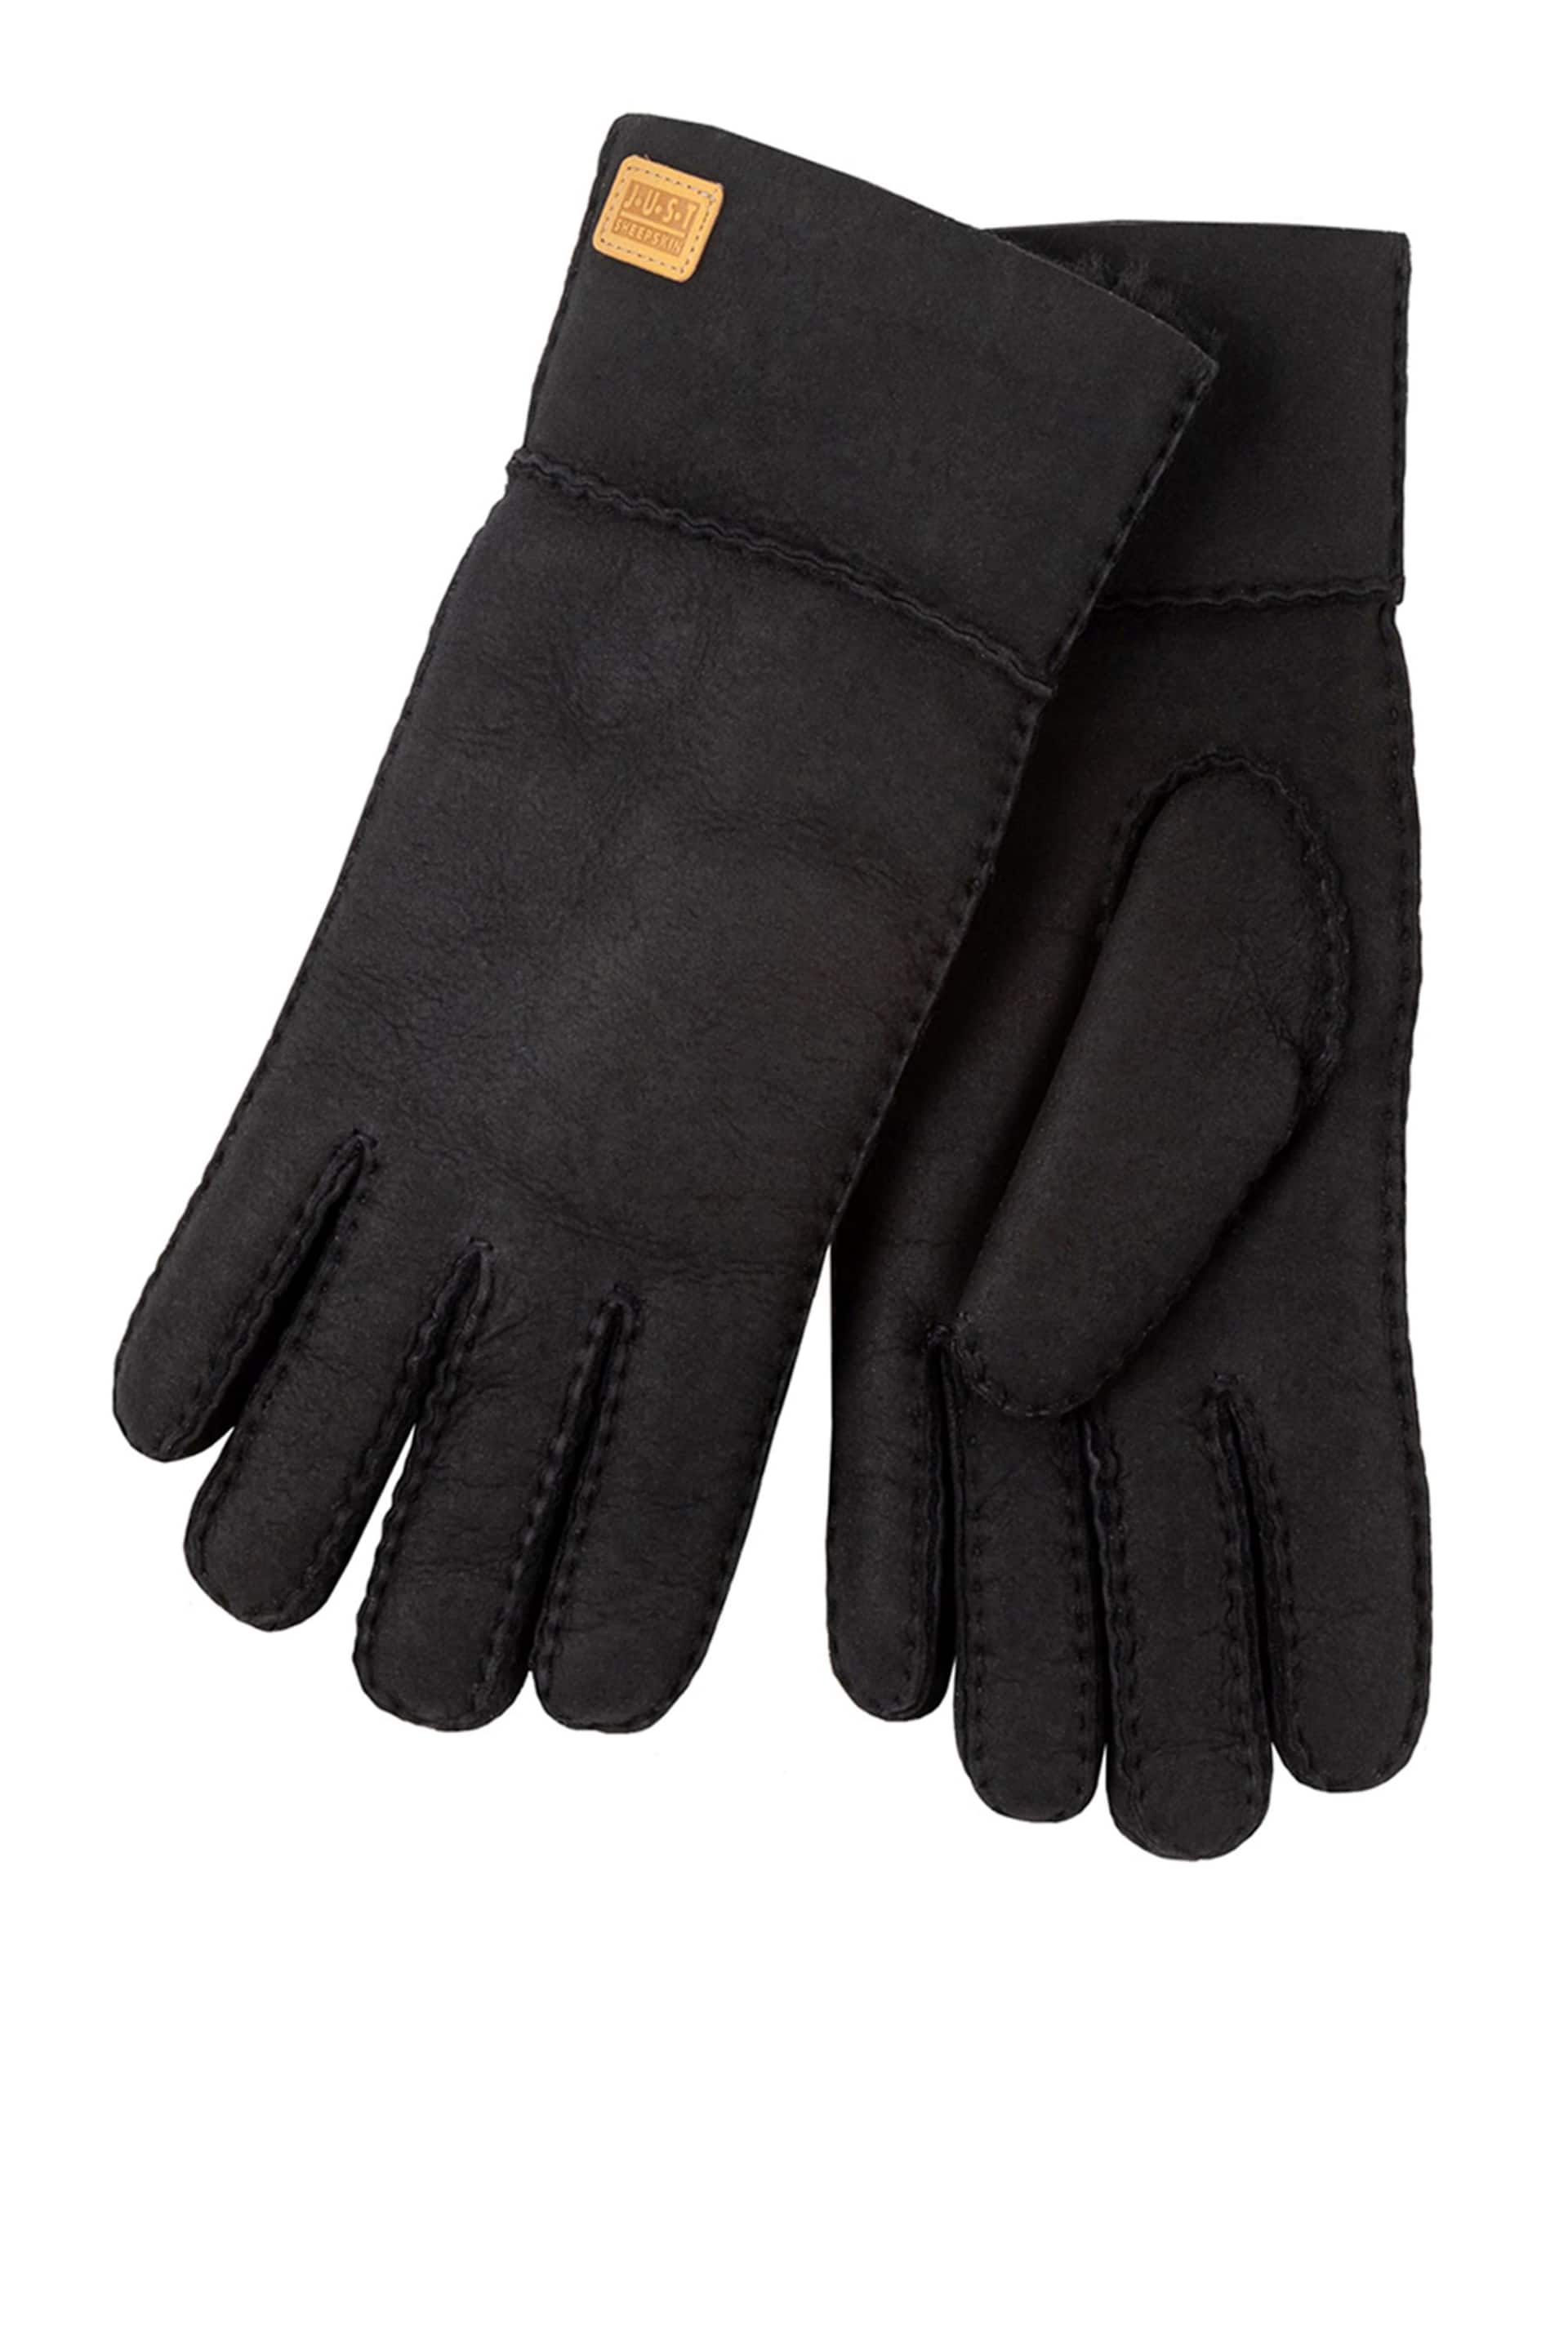 Just Sheepskin Black Ladies Charlotte Sheepskin Gloves - Image 3 of 4